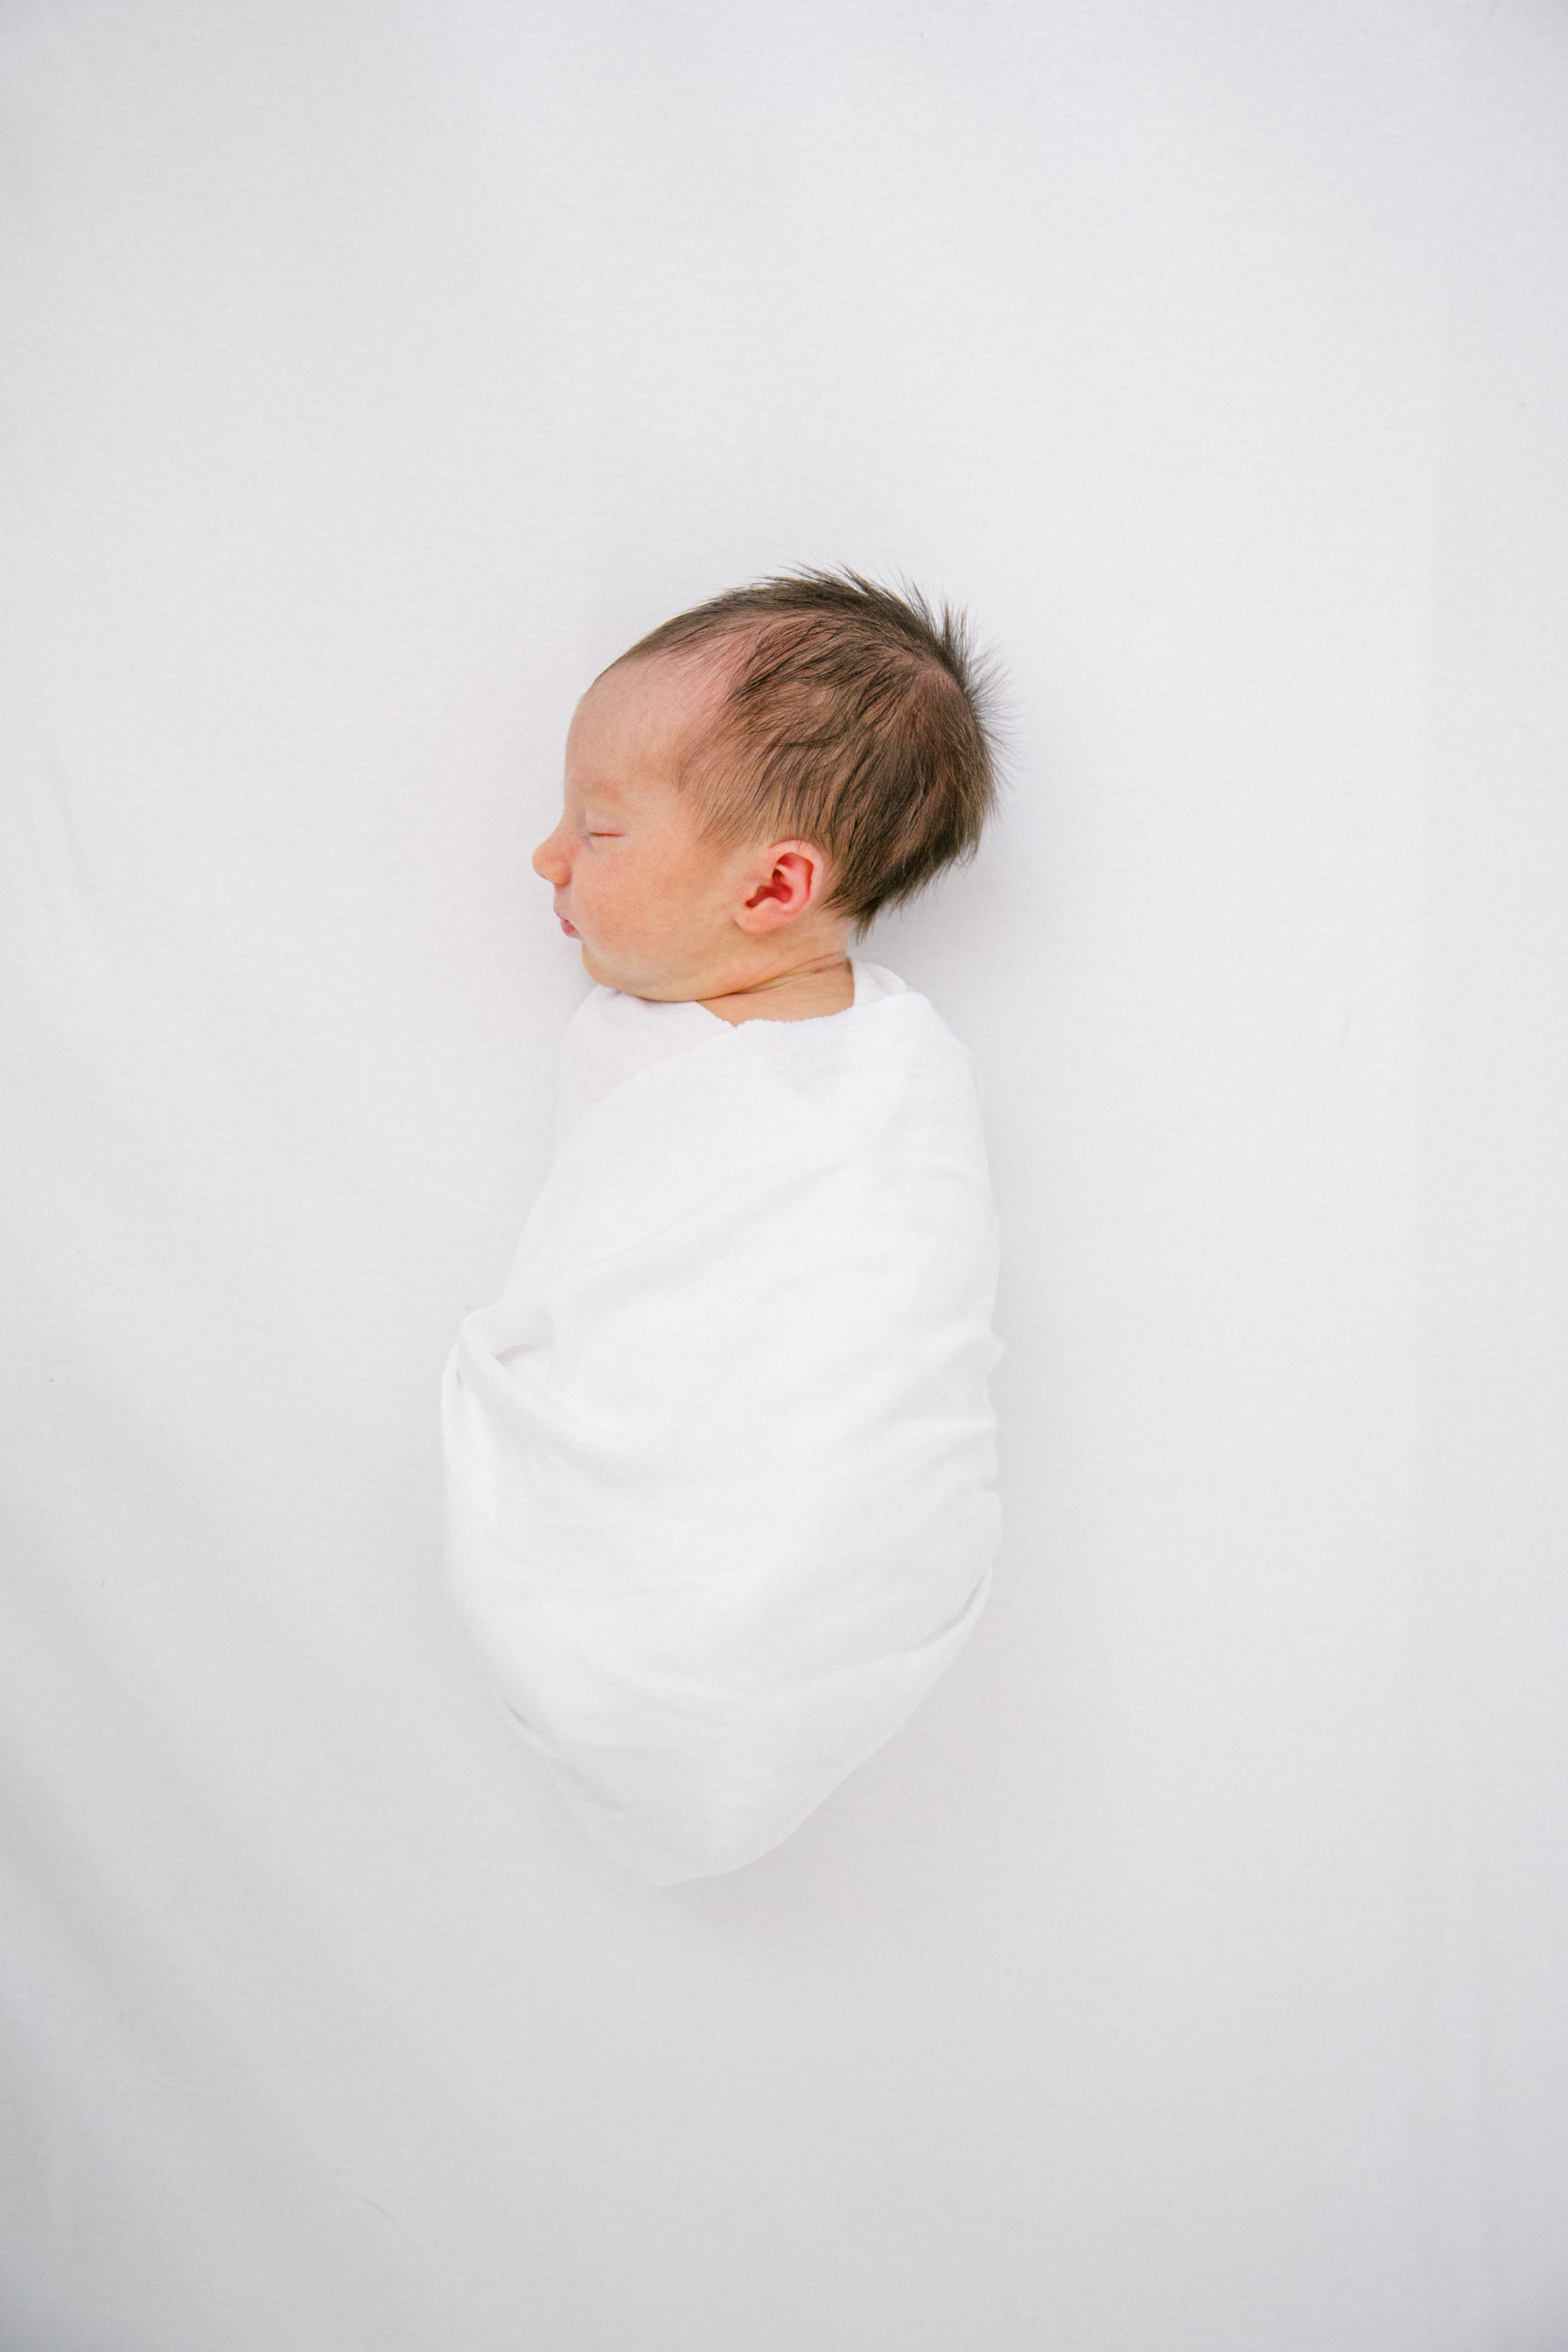 Yuma Arizona Newborn Photographer